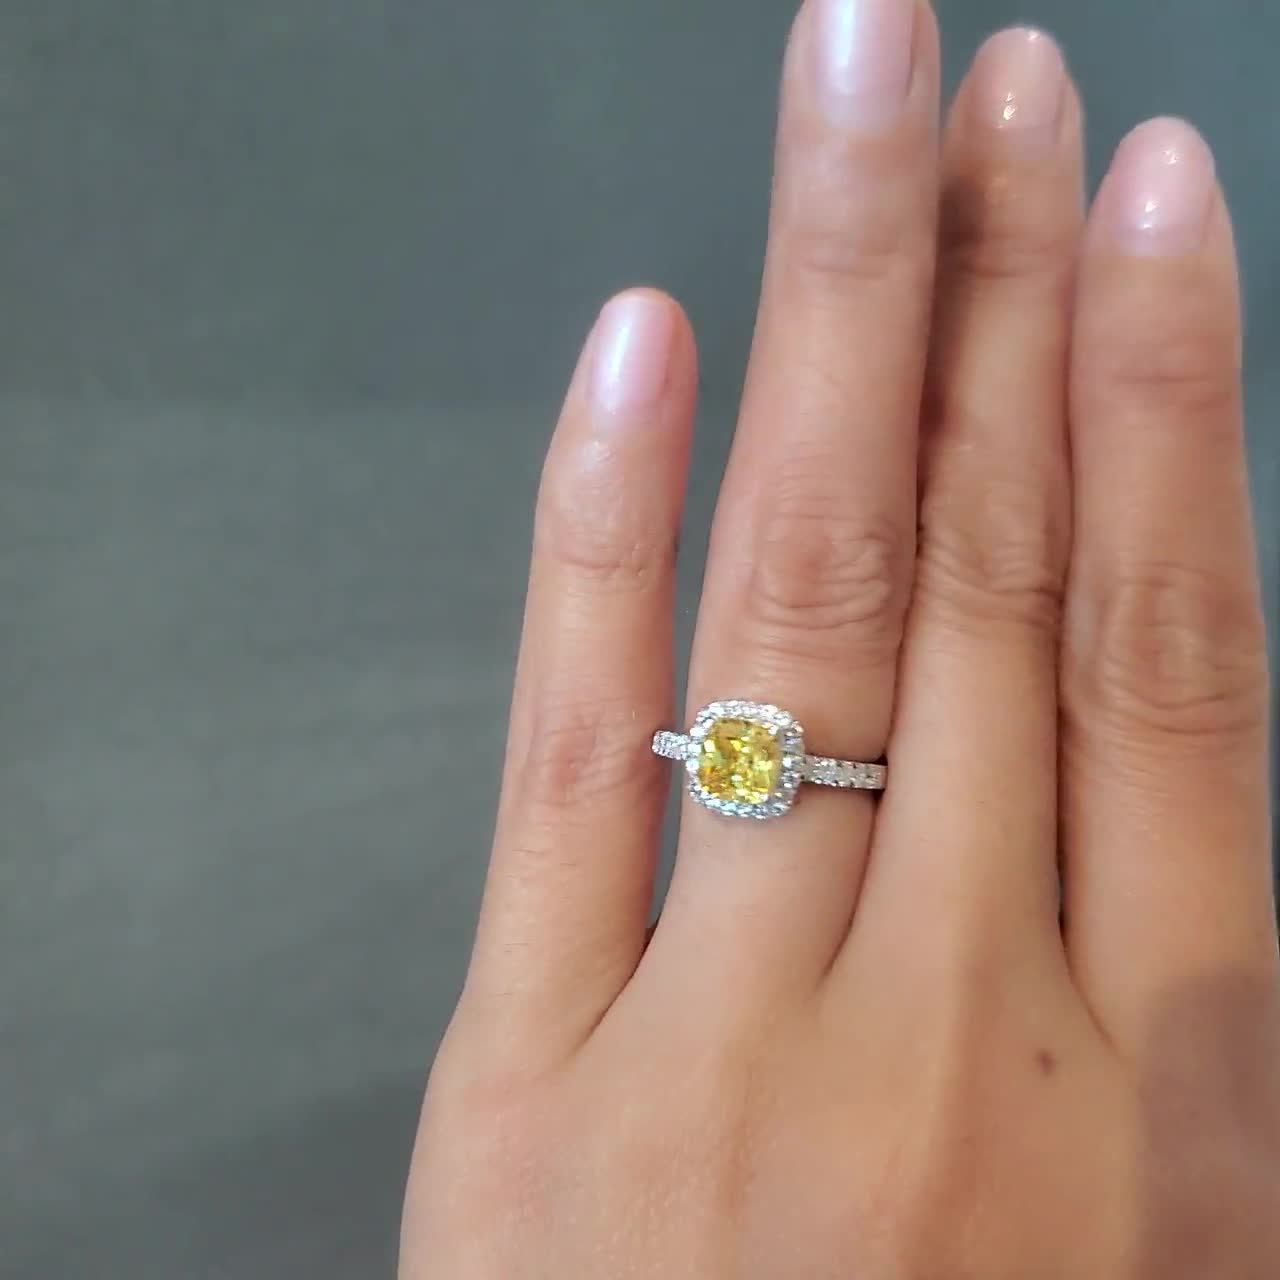 Premium Investment Jewelry  Diamond ring shape, Pink morganite engagement  ring, Jewelry rings engagement